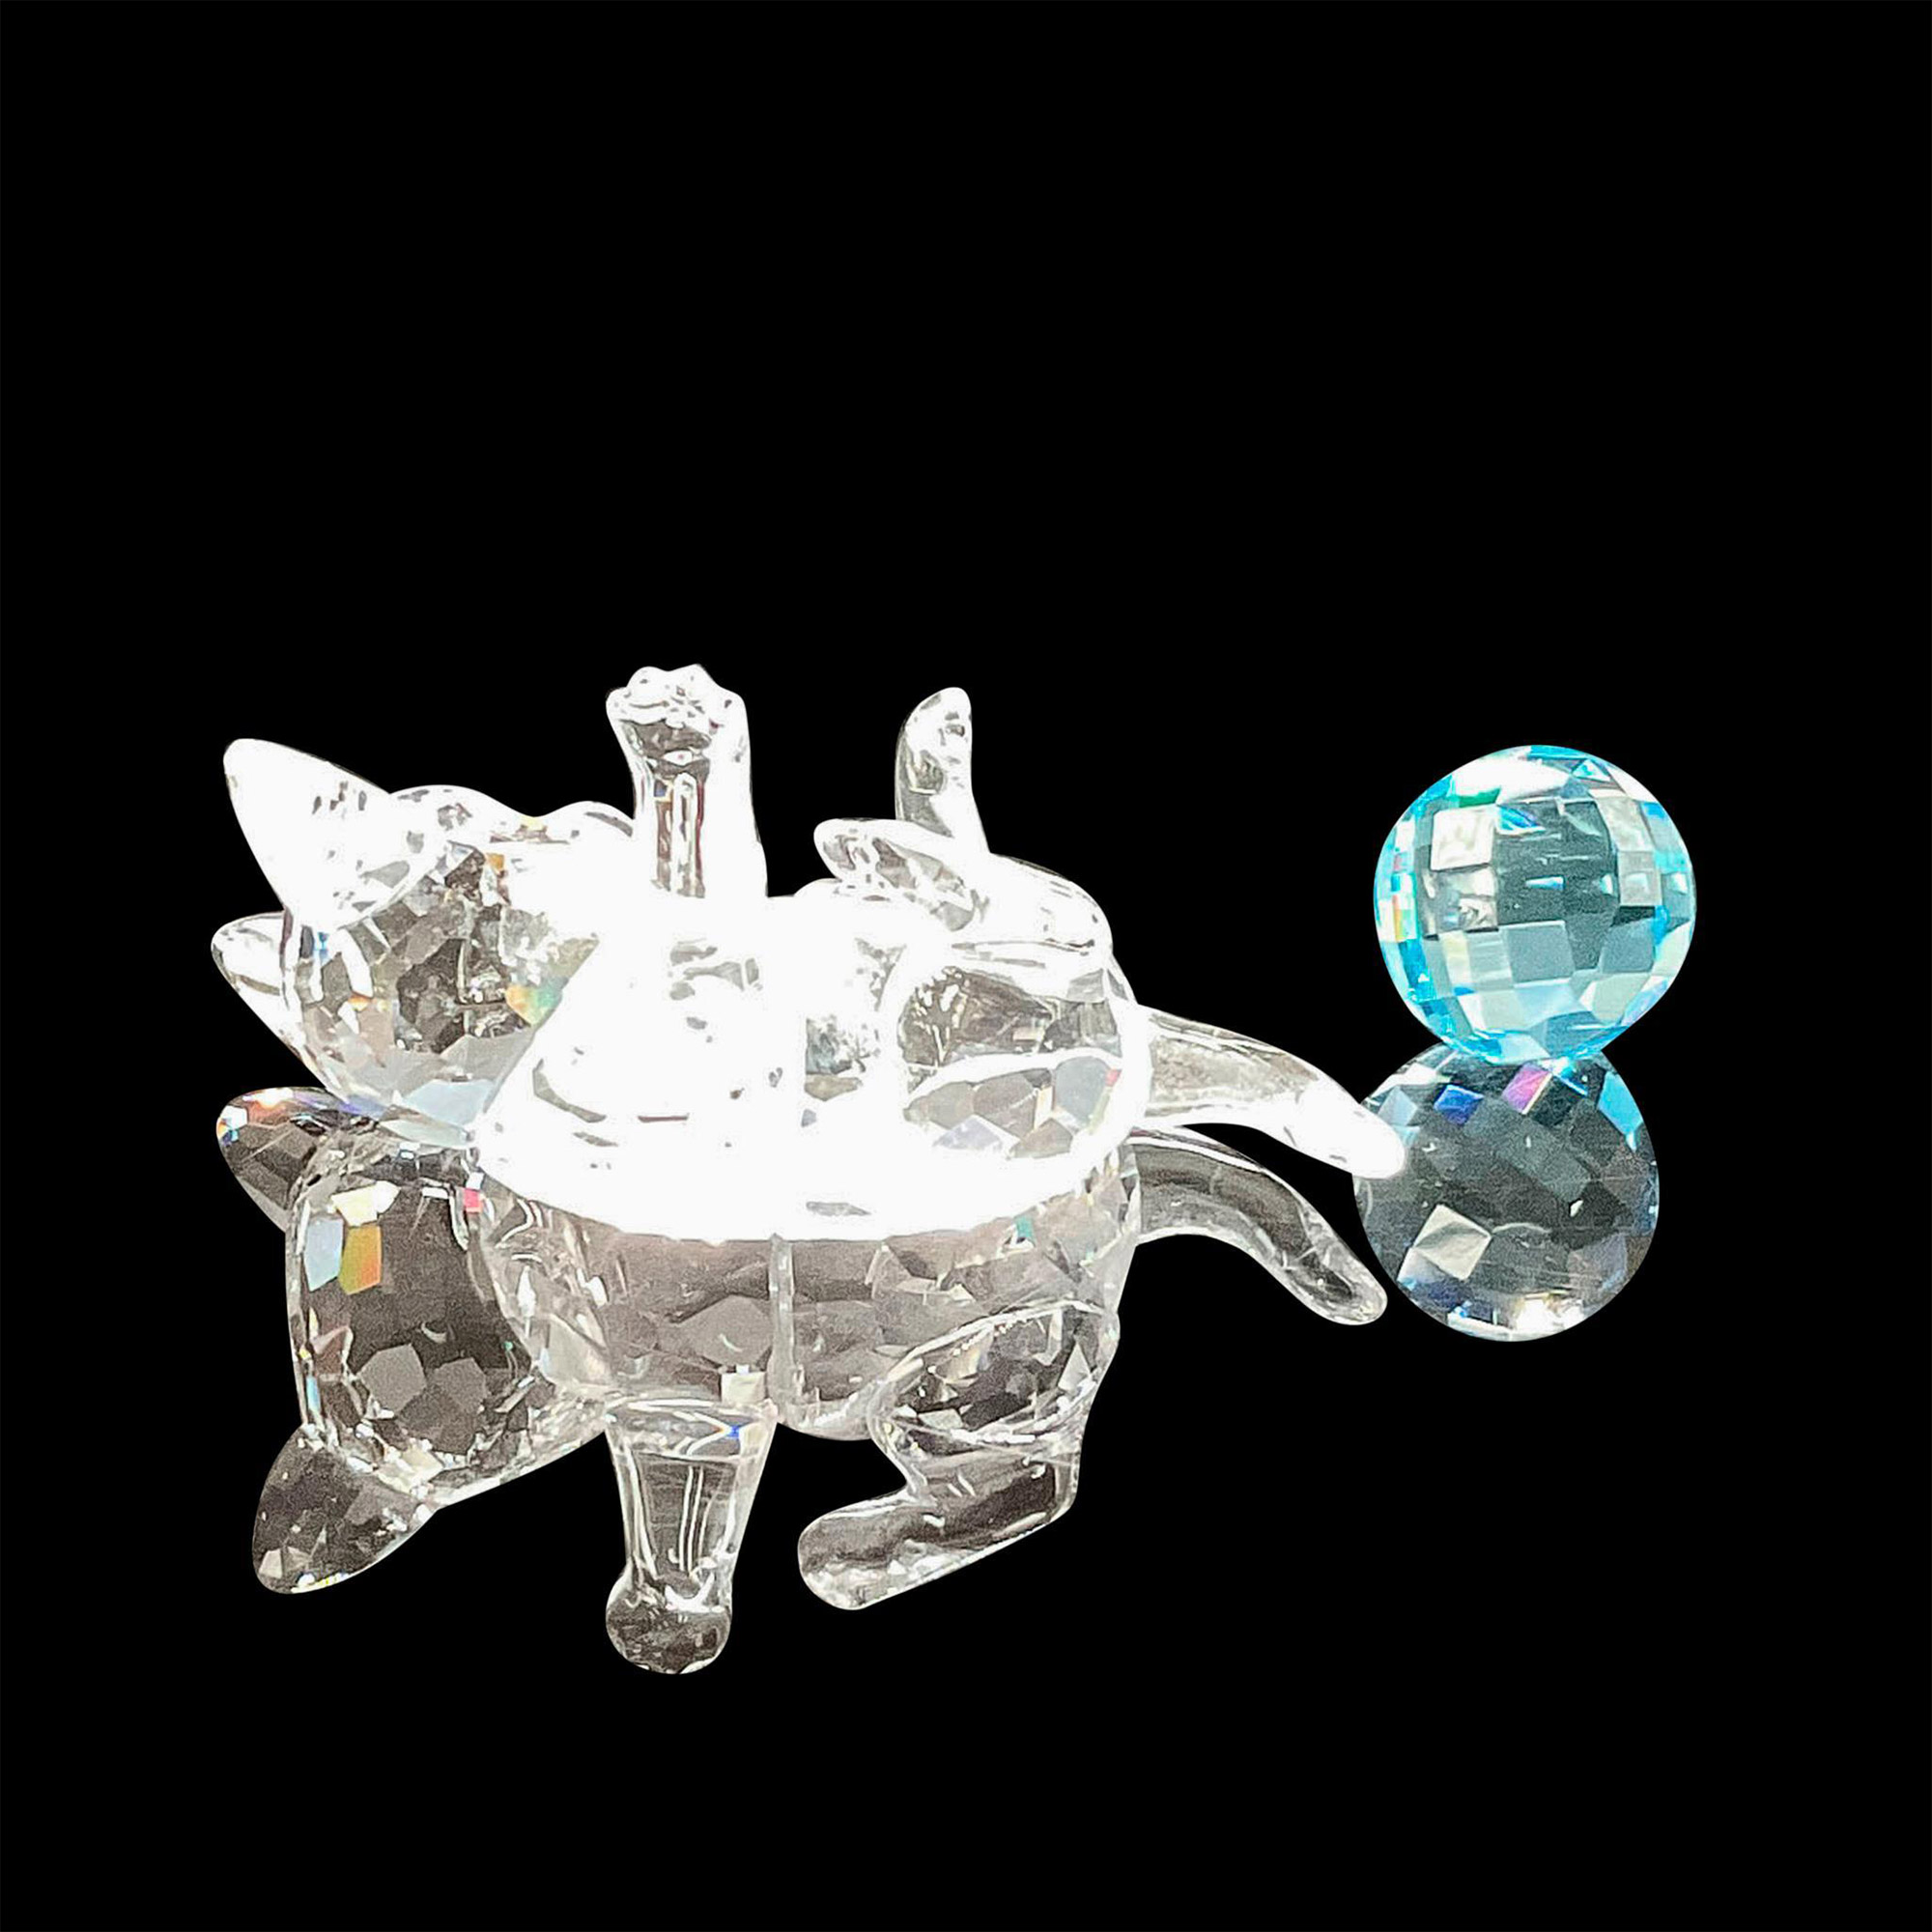 Swarovski Crystal Figurine, Lying Kitten with Blue Ball - Image 2 of 4